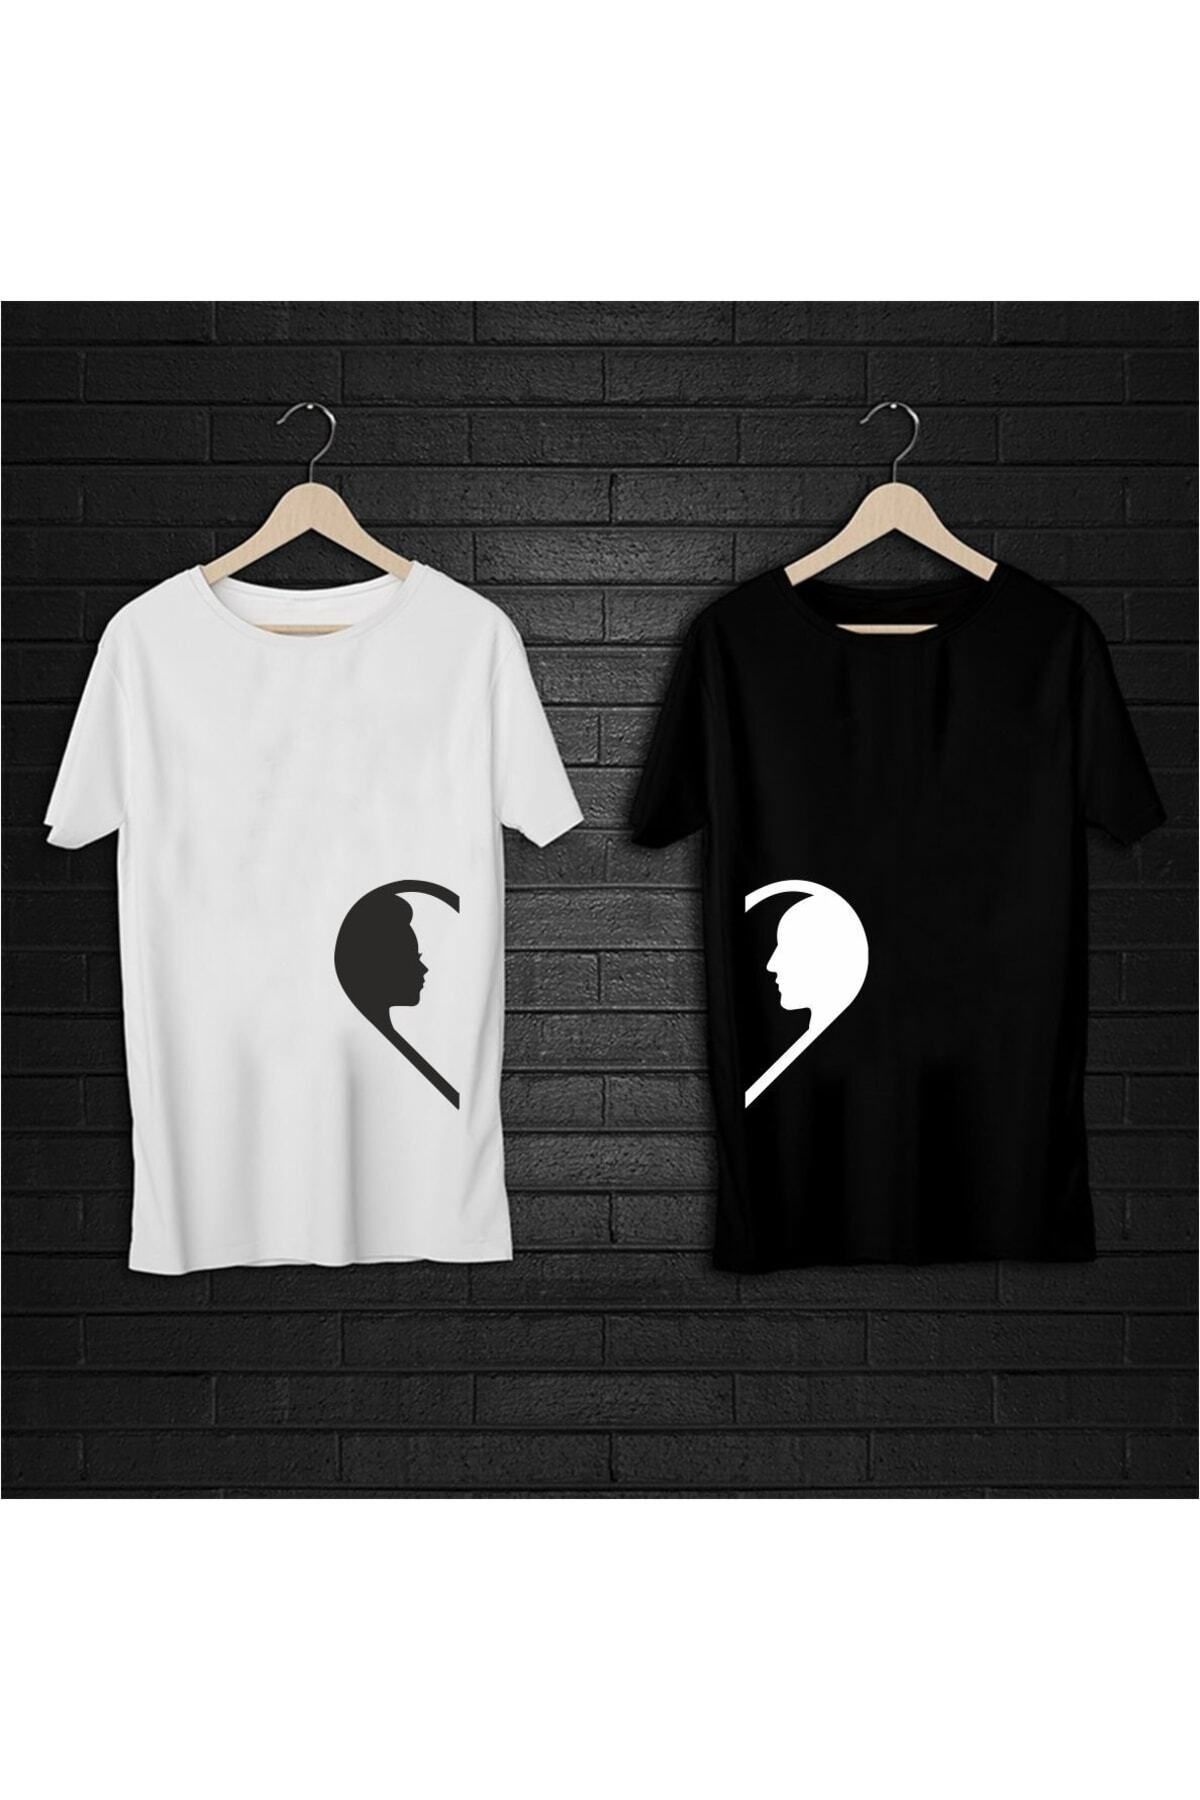 Genel Markalar Sevgili T-shirt Kombini Siyah Ve Beyaz Oversize